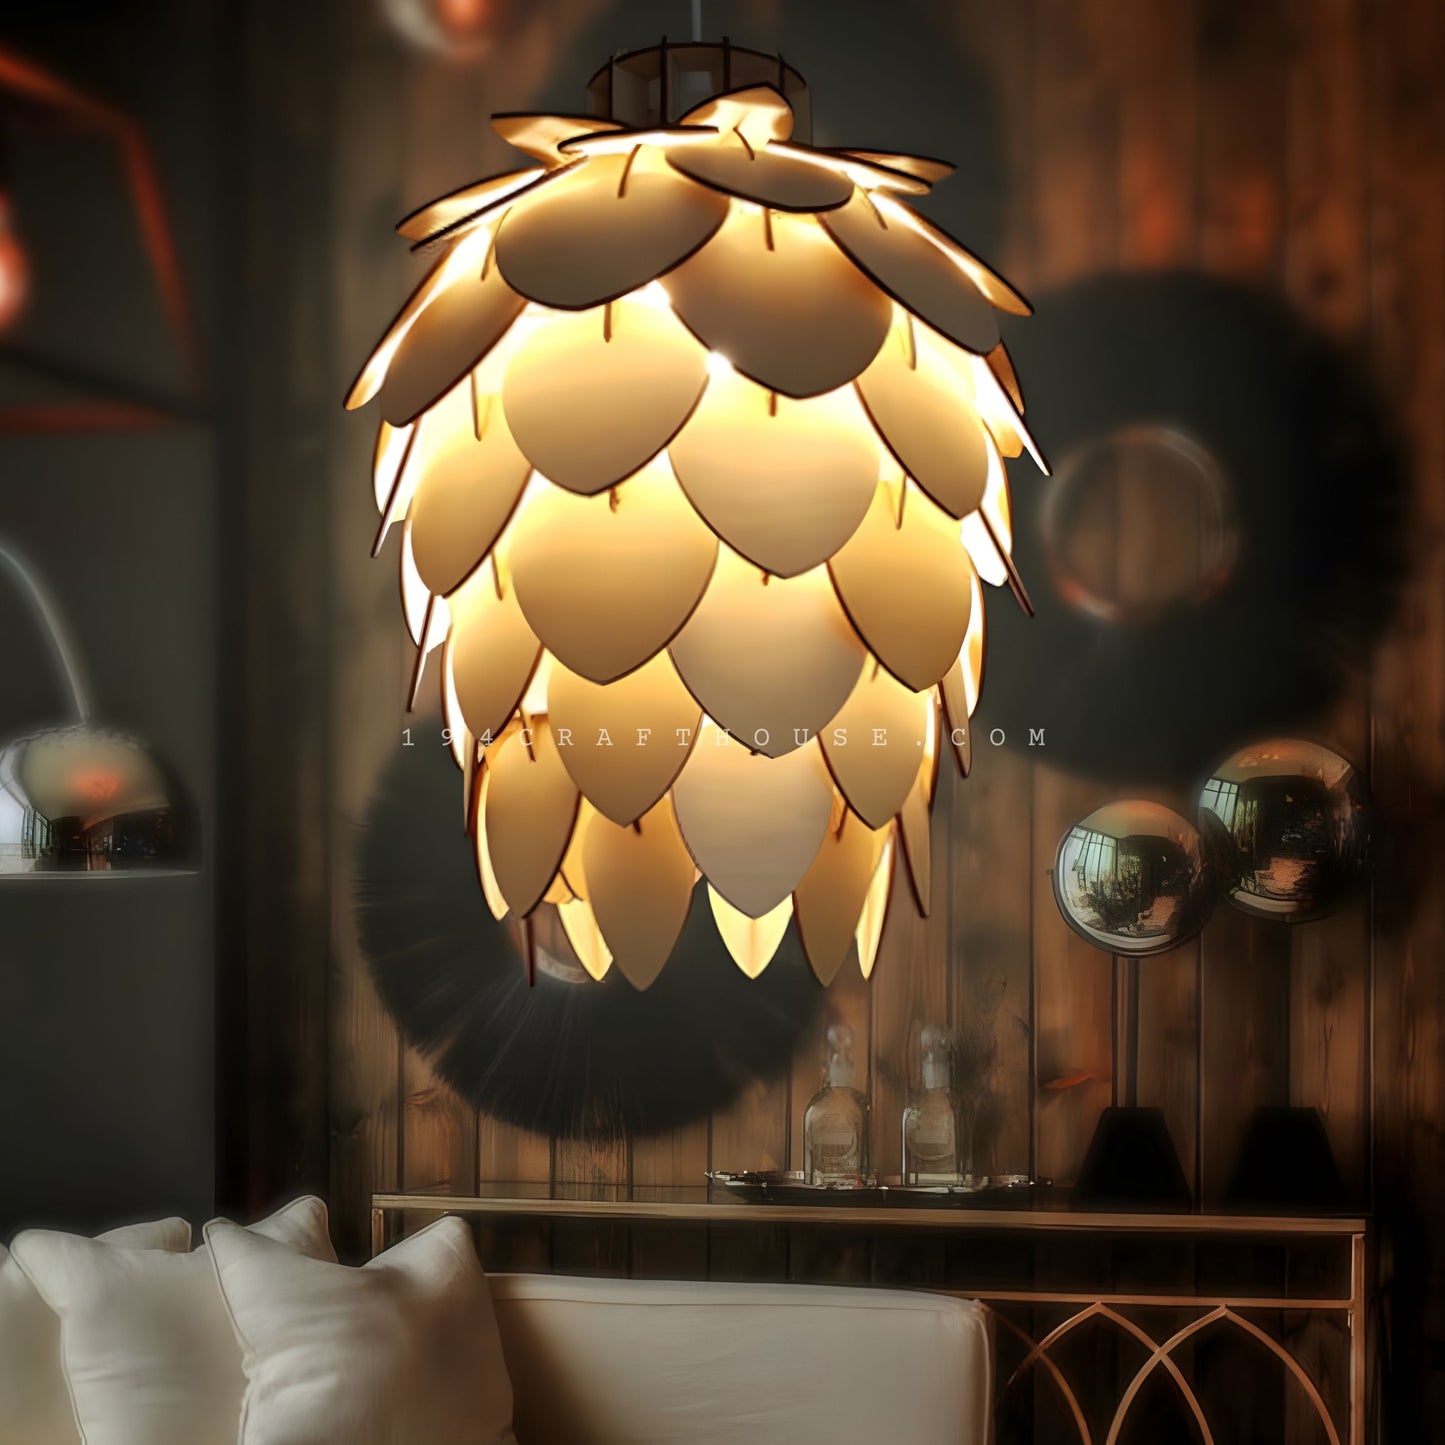 Pine Cone Wood Pendant Light Fixture For Kitchen Home Decor, Chandelier Ceiling Lamp